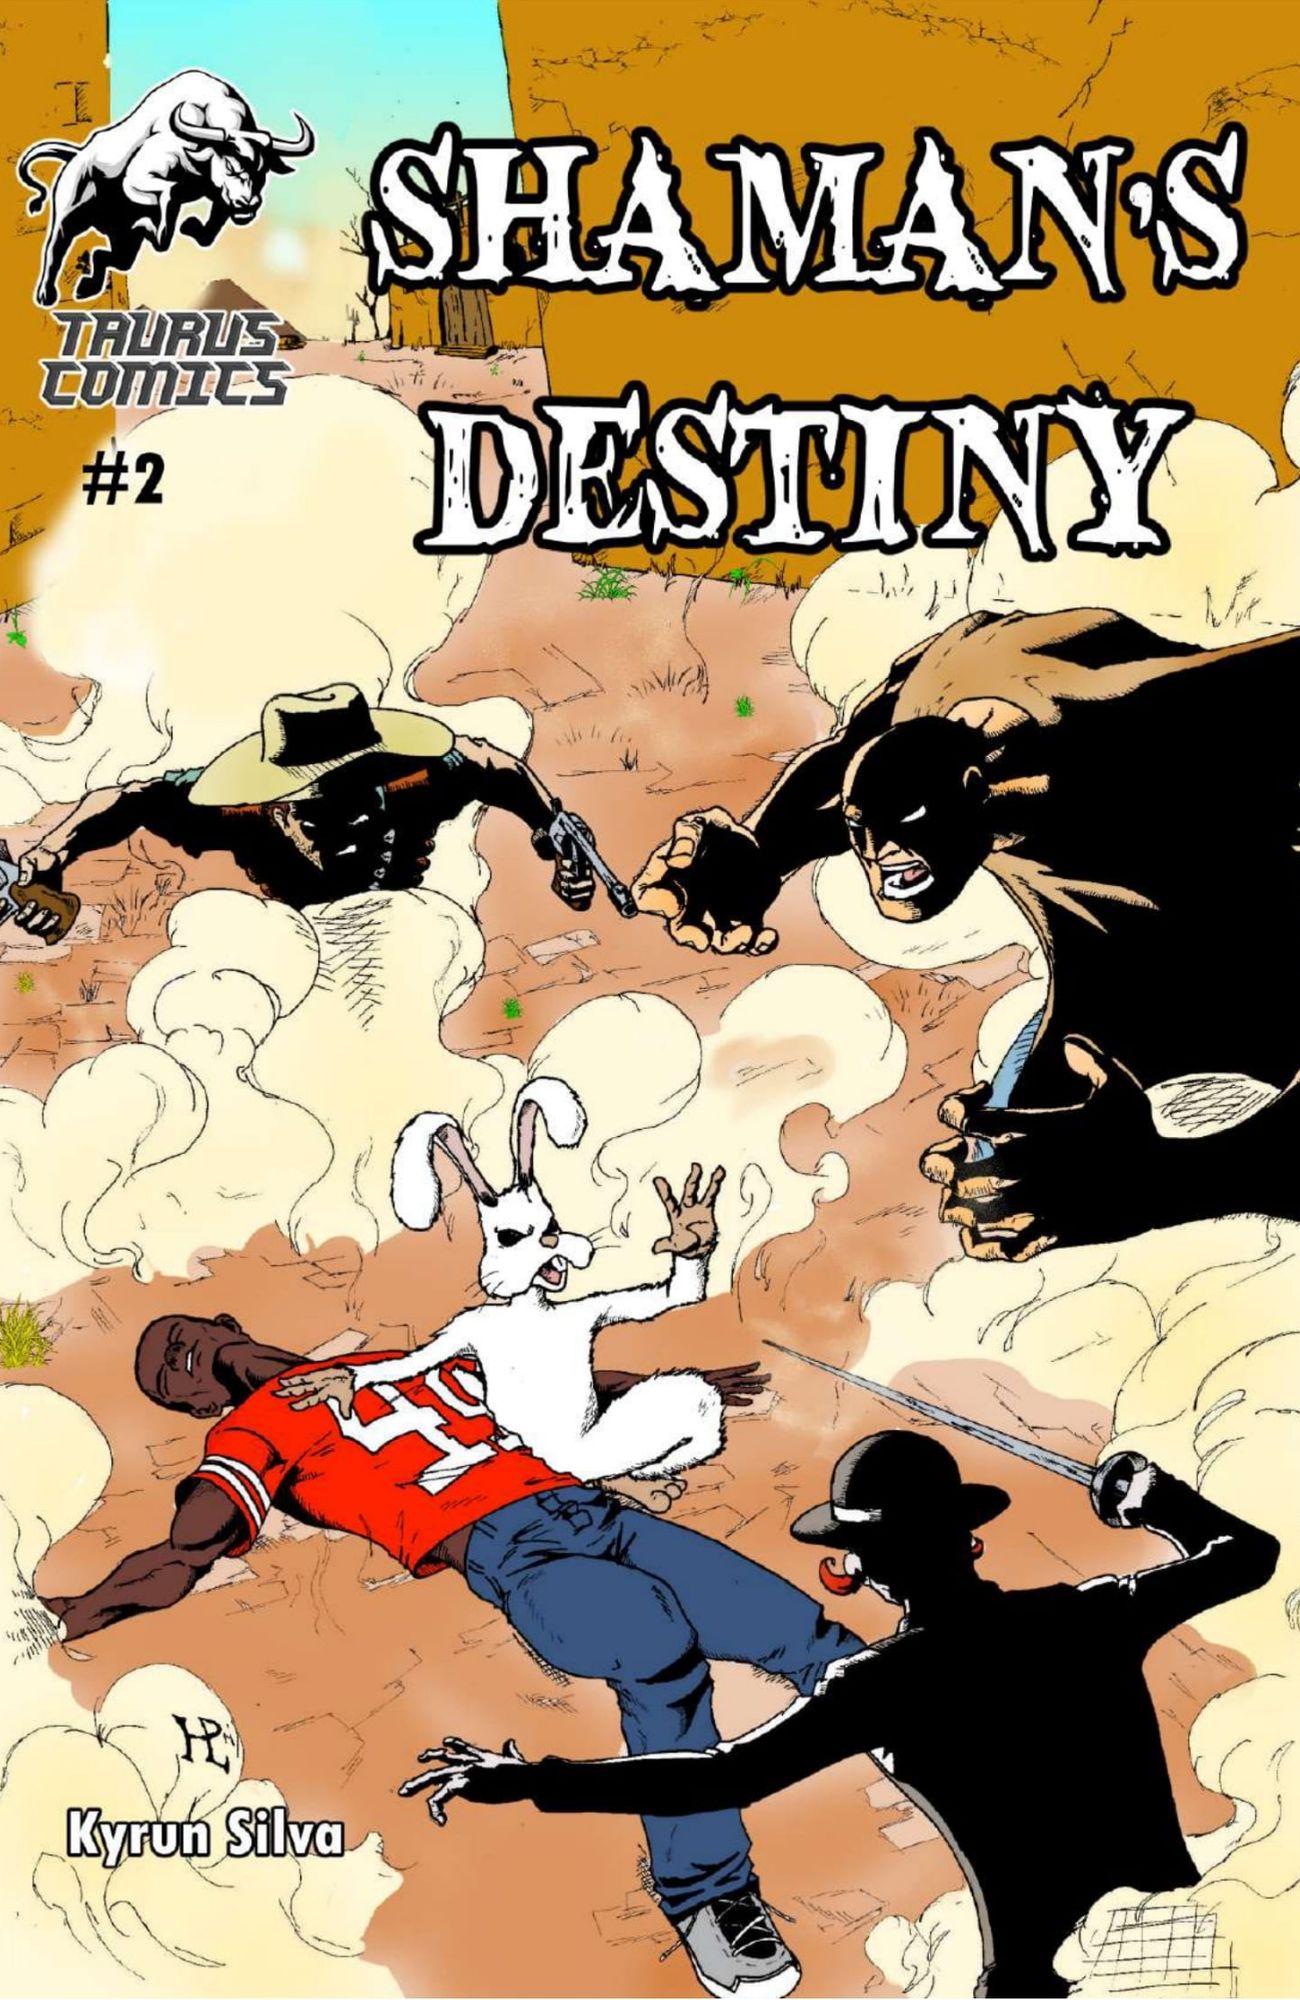 Shaman’s Destiny Issue 2